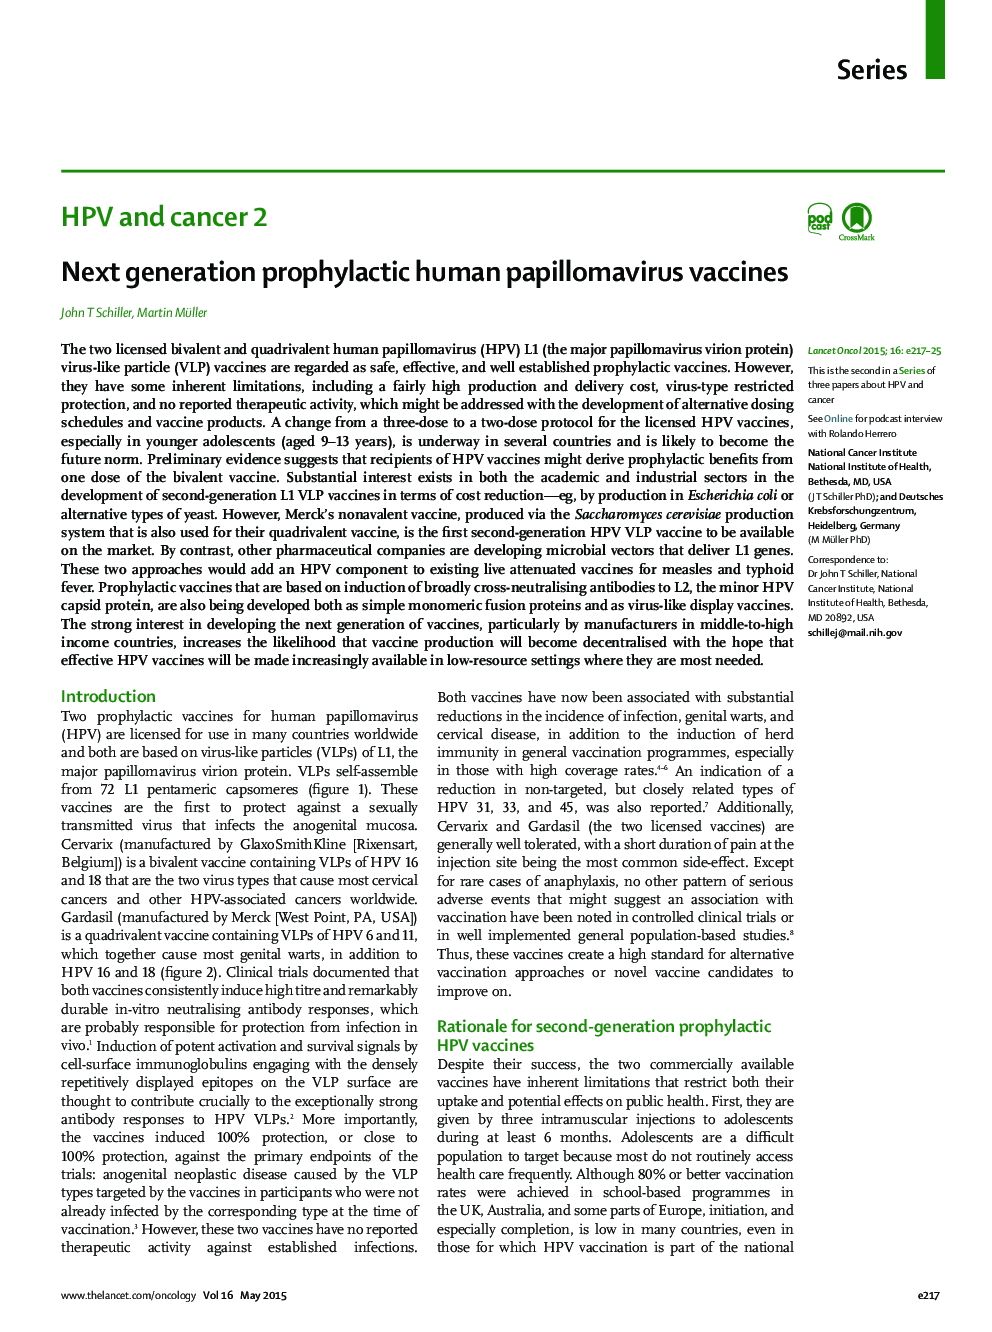 Next generation prophylactic human papillomavirus vaccines